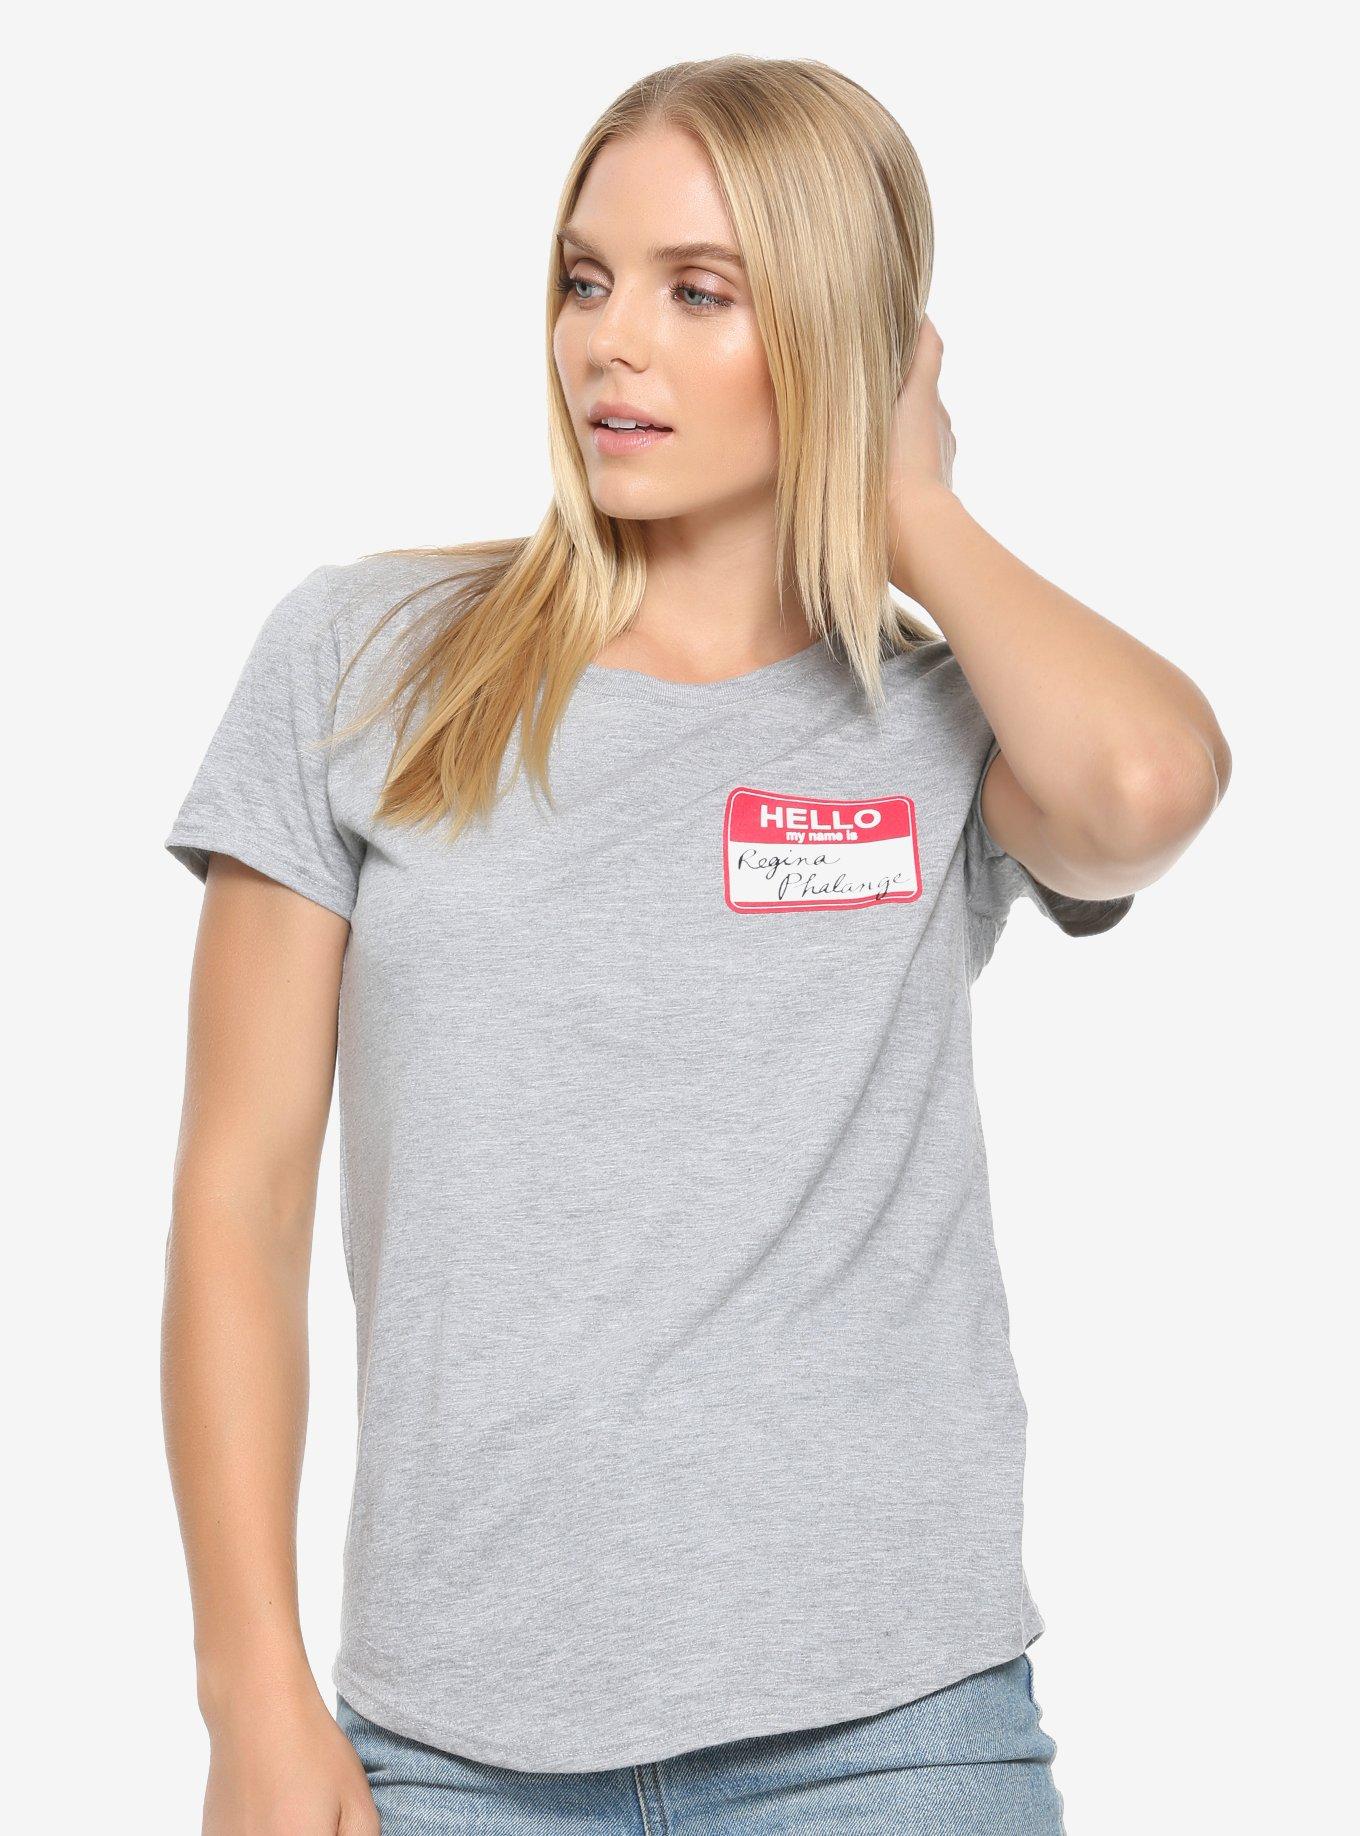 Friends Regina Phalange Womens T-Shirt - BoxLunch Exclusive | BoxLunch